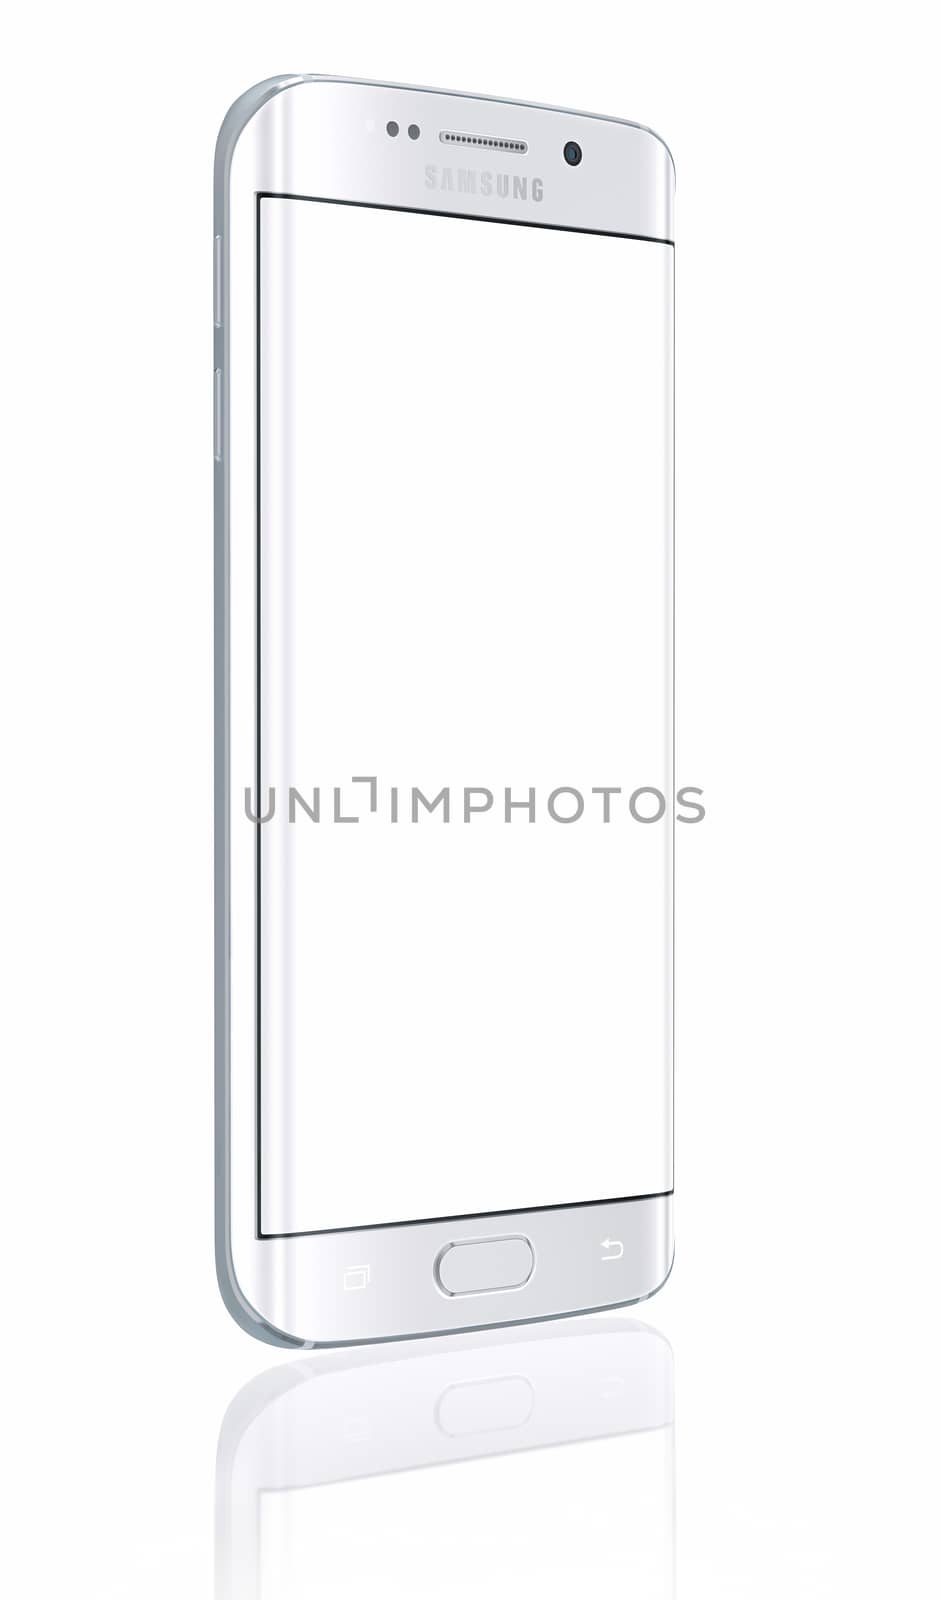 Samsung Galaxy S6 Edge with blank screen by manaemedia